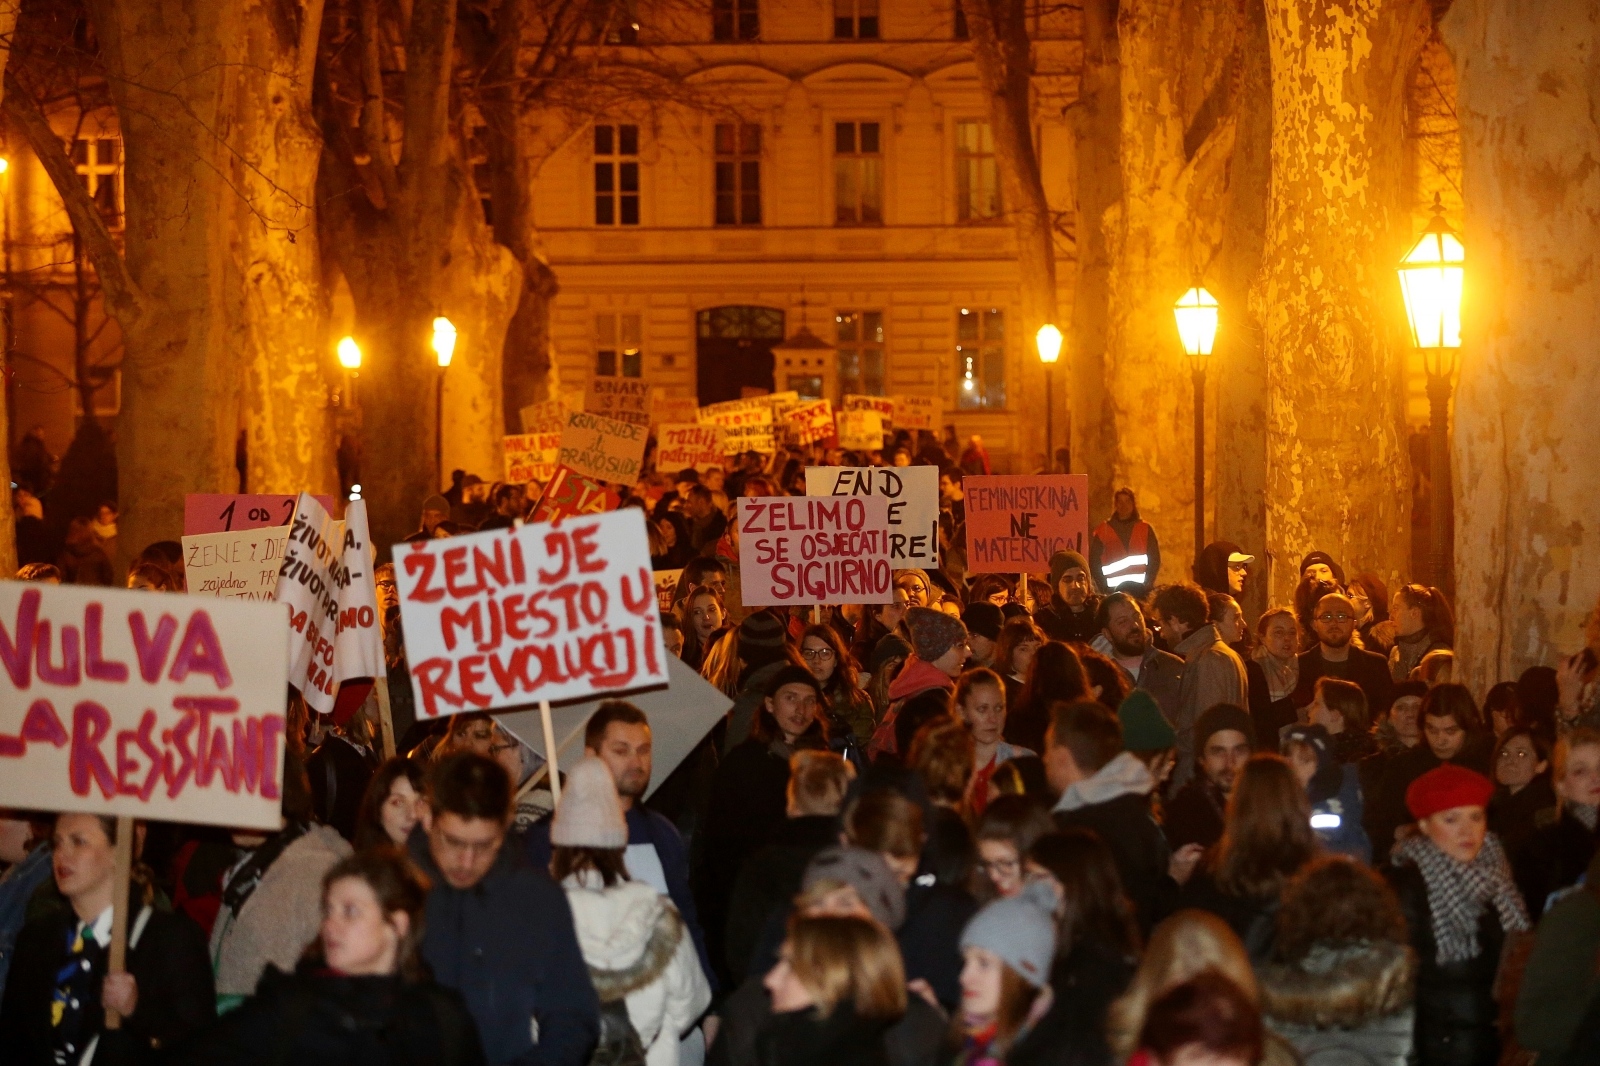 08.03.2020., Zagreb - Feministicki kolektiv fAKTIV odrzao je Nocni mars - 8. mart, pod sloganom "Zivio feminizam! Zivio 8. mart!" 

Photo: Dalibor Urukalovic/PIXSELL